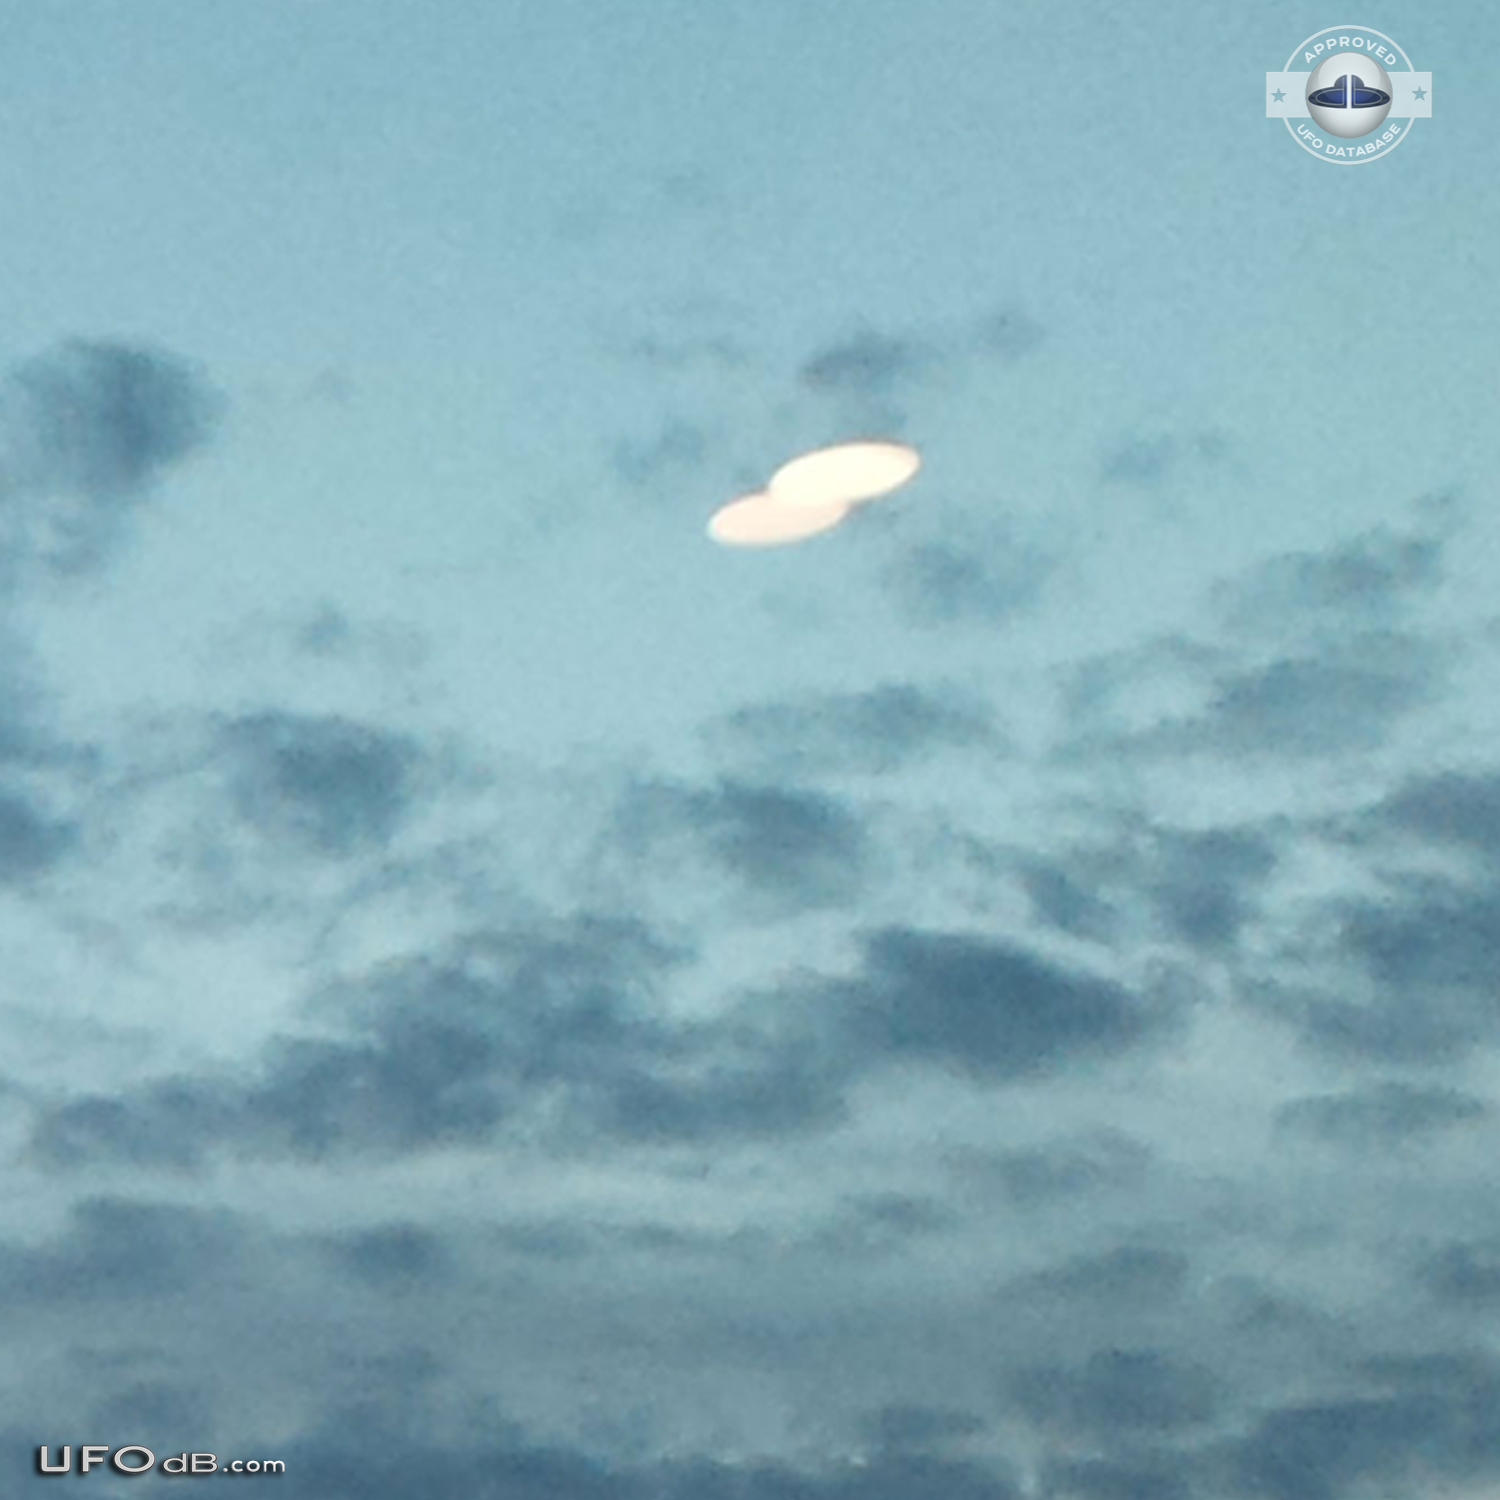 UFO photo captures several UFOs over Tallinn, Harju in Estonia 2012 UFO Picture #515-4